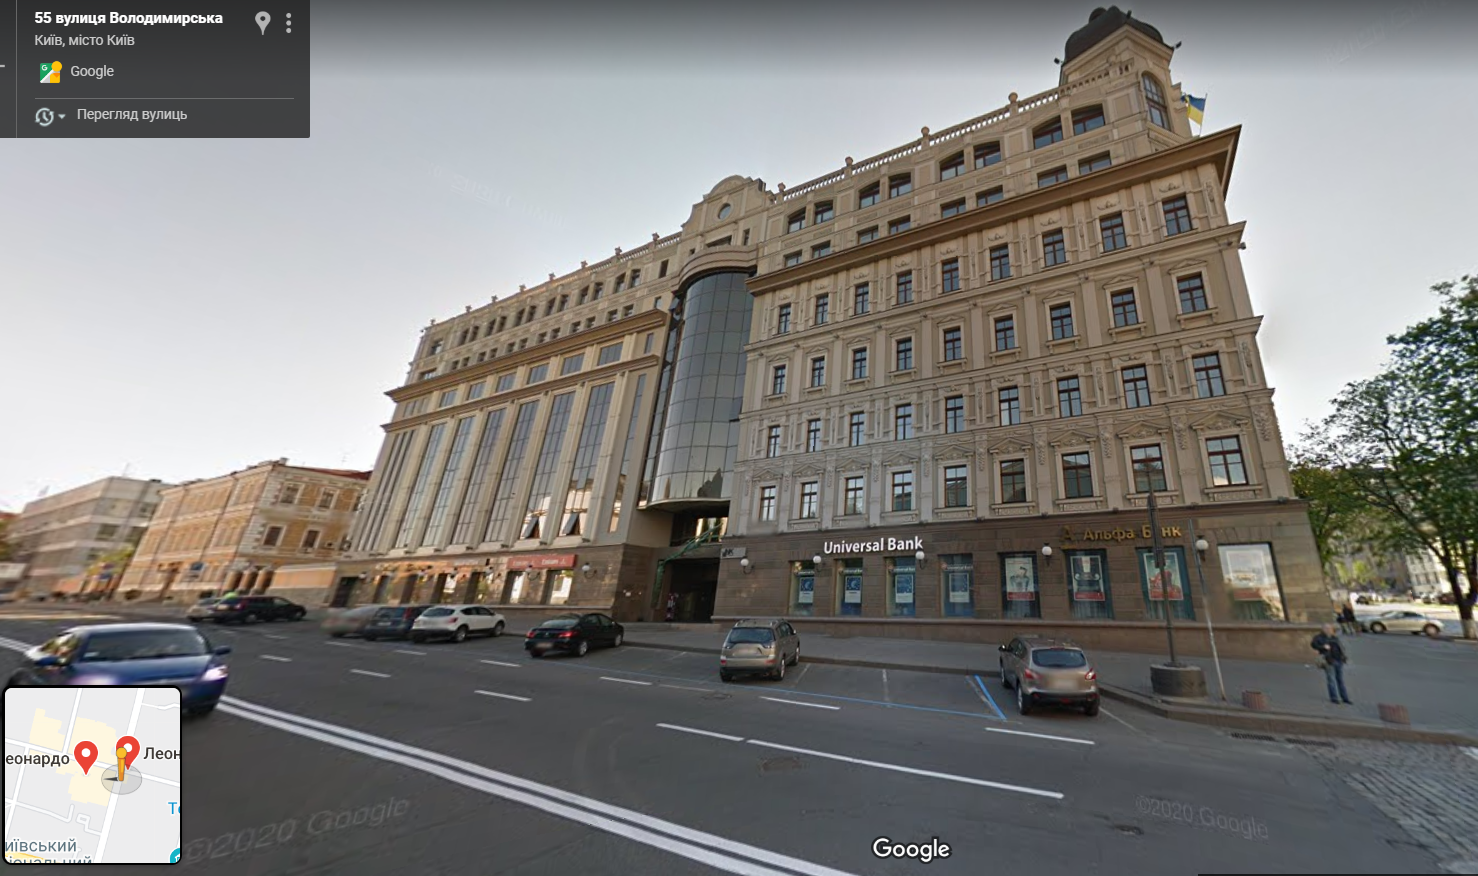 Бизнес-центр "Леонардо" в Киеве, который захватил террорист